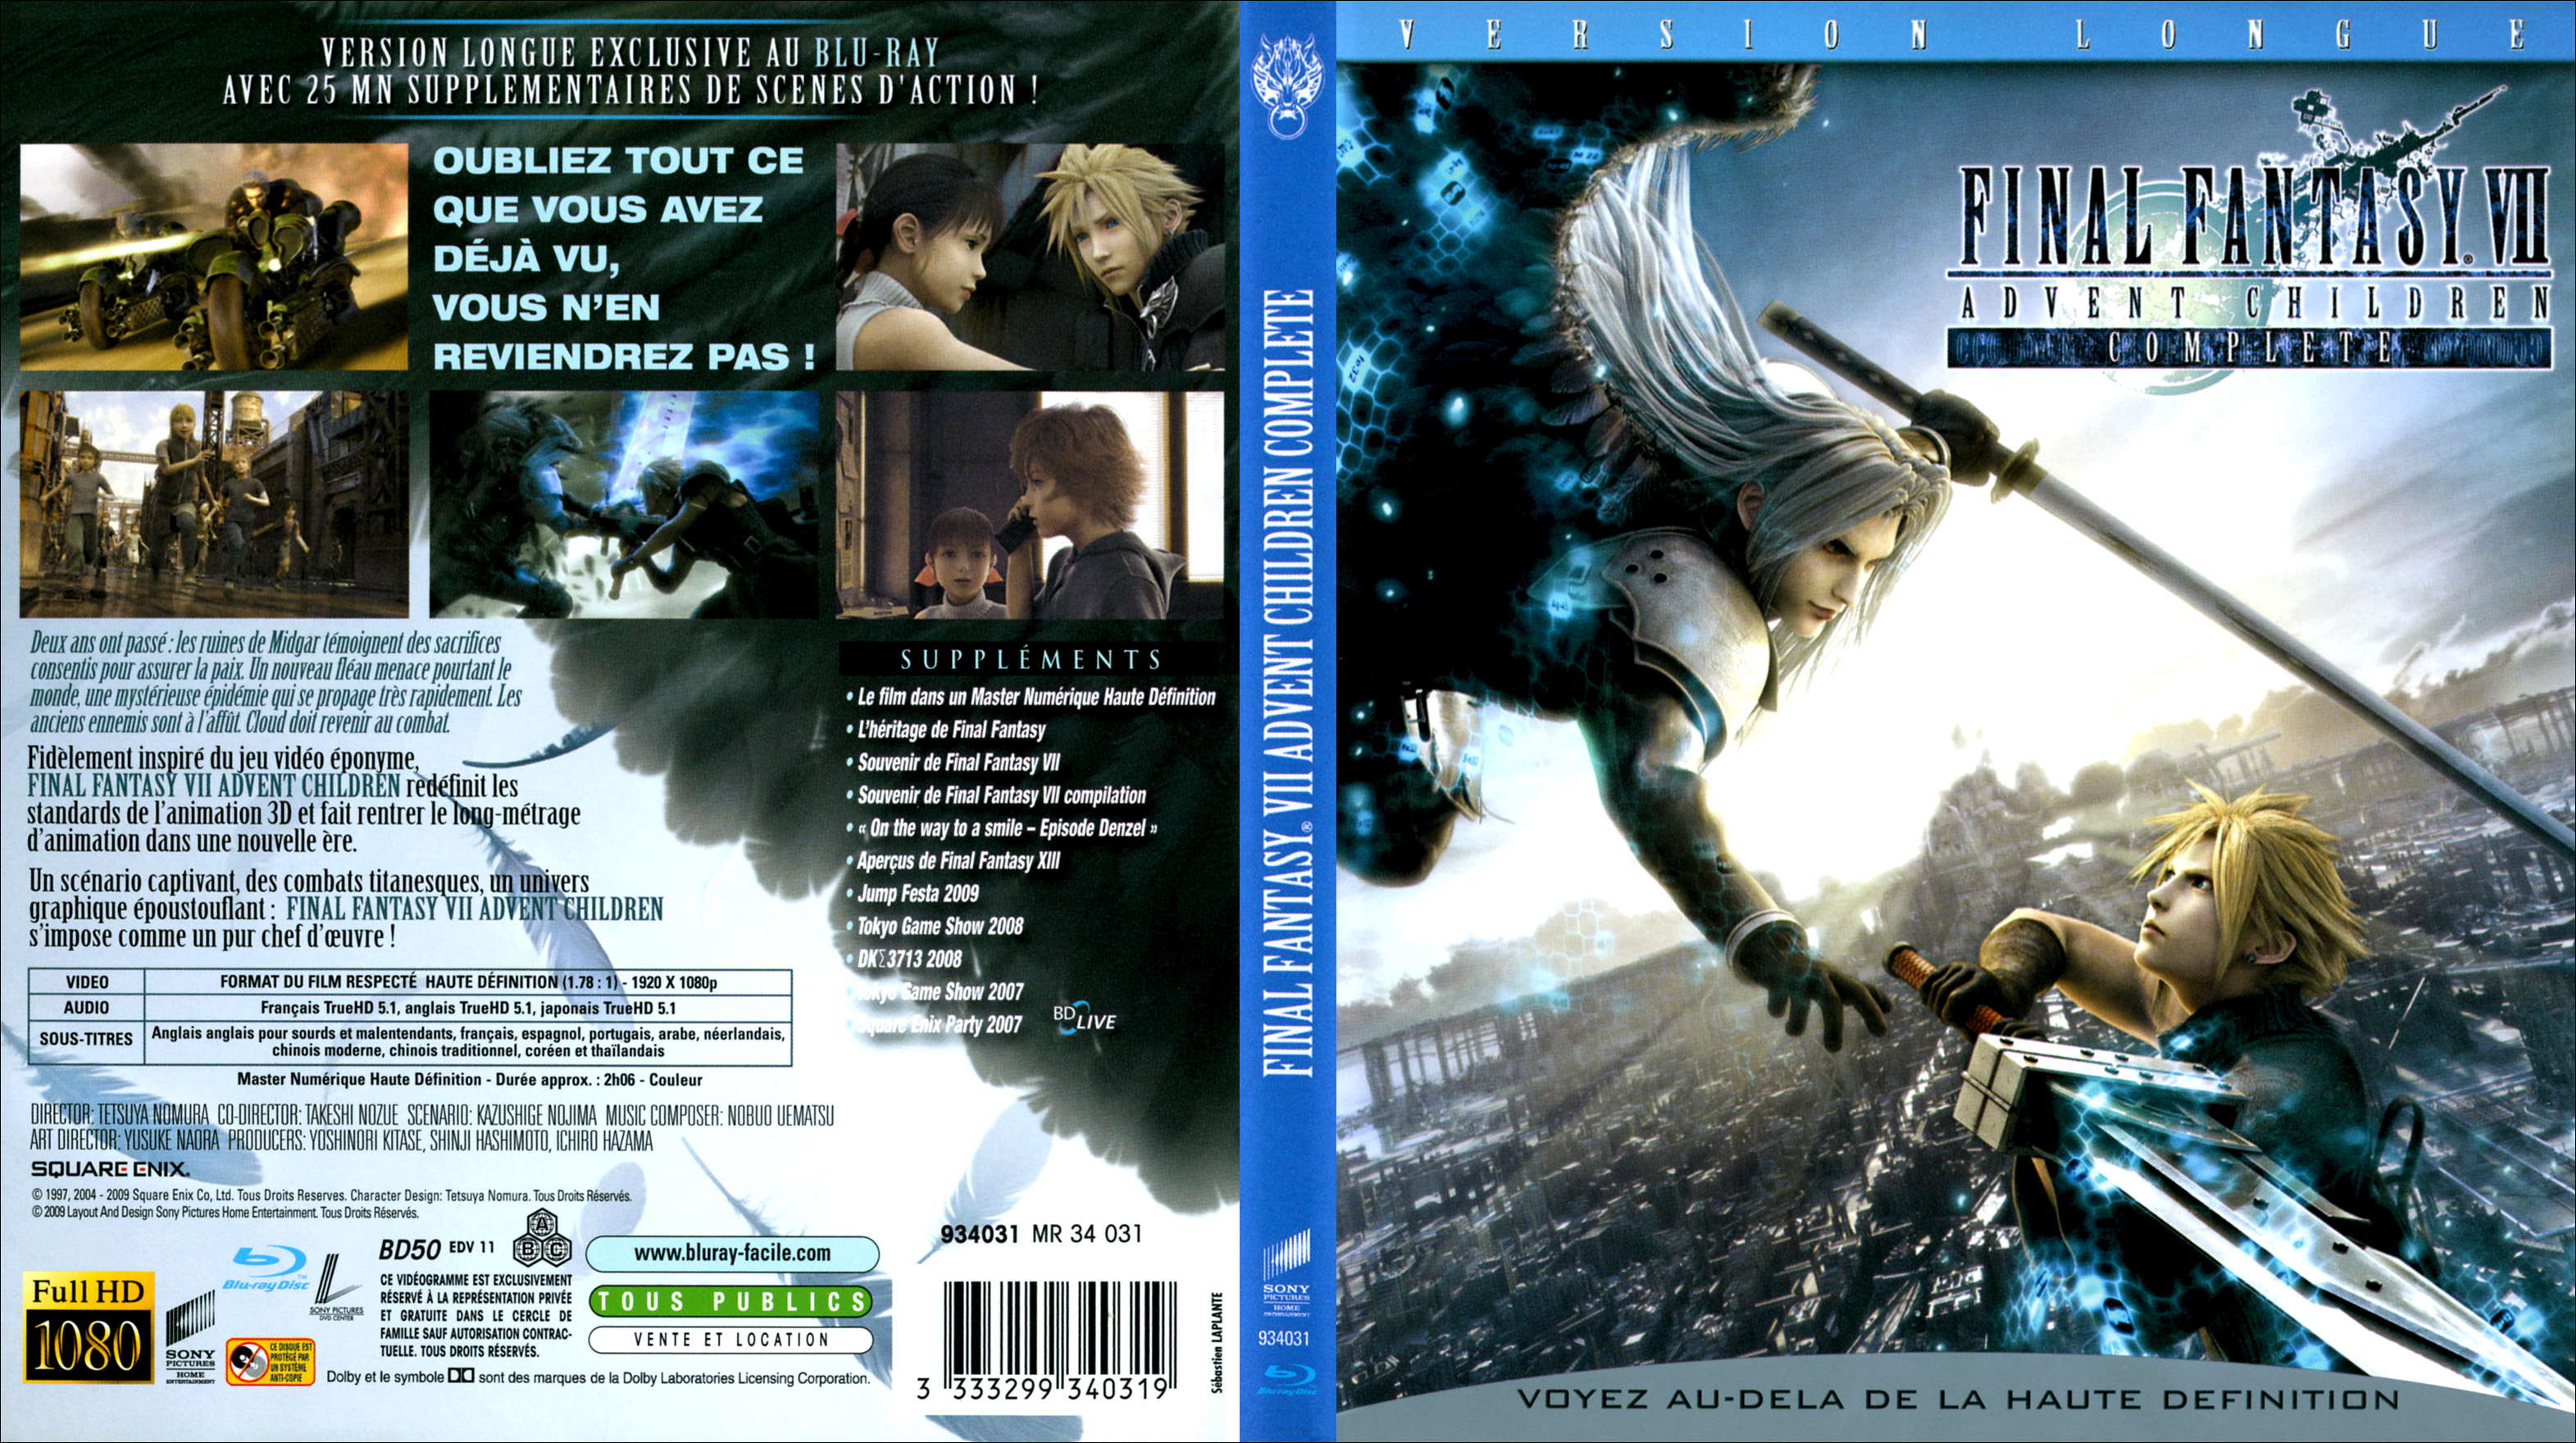 Jaquette DVD Final fantasy VII Advent children (BLU-RAY)